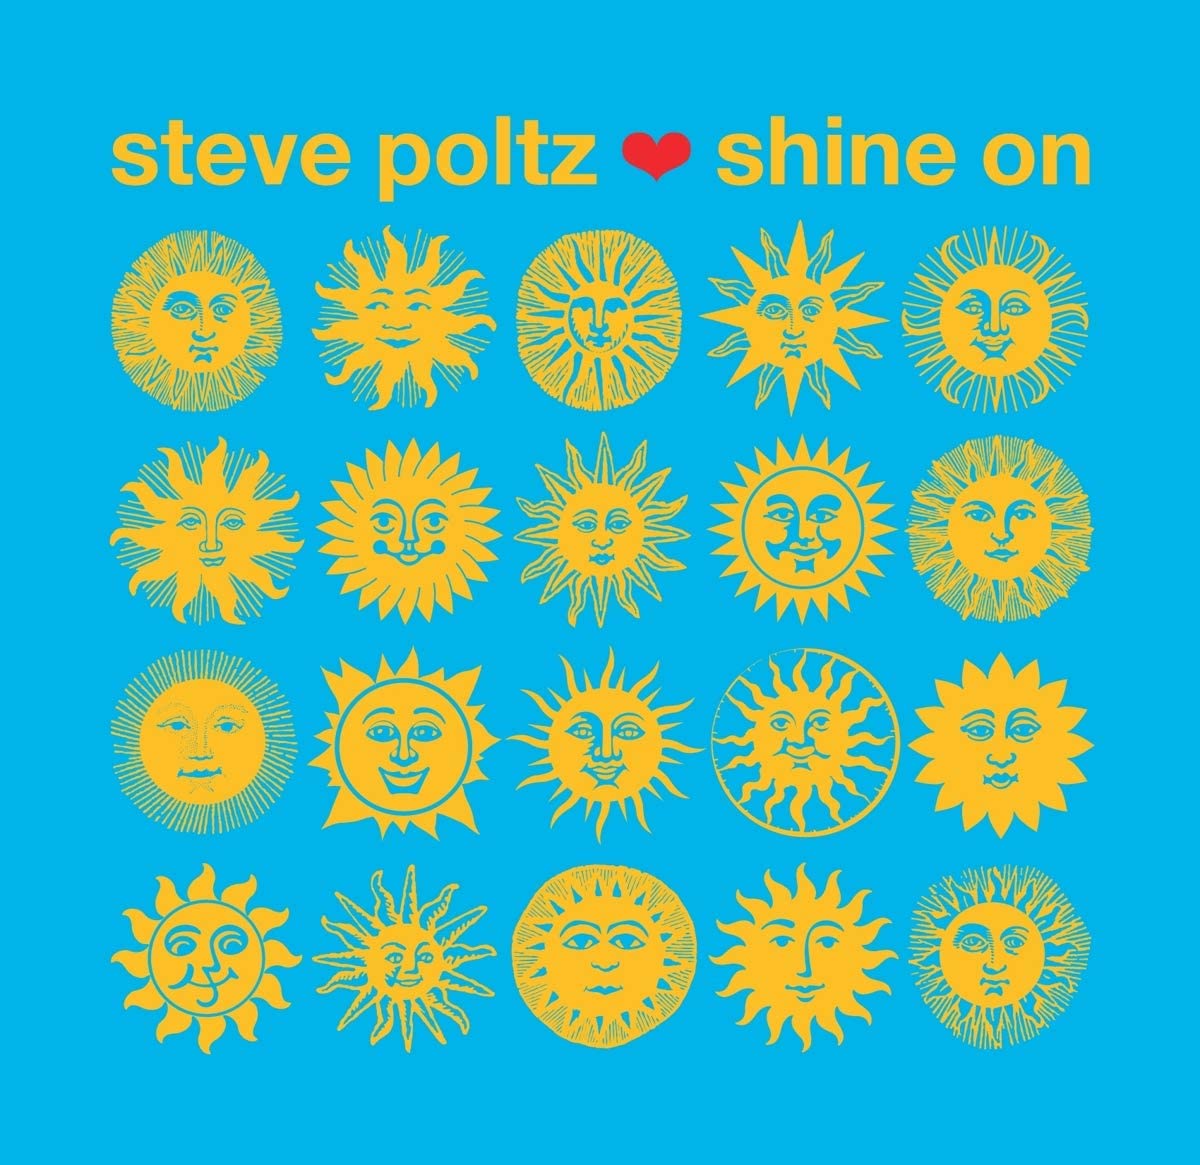 Poltz, Steve/Shine On [CD]